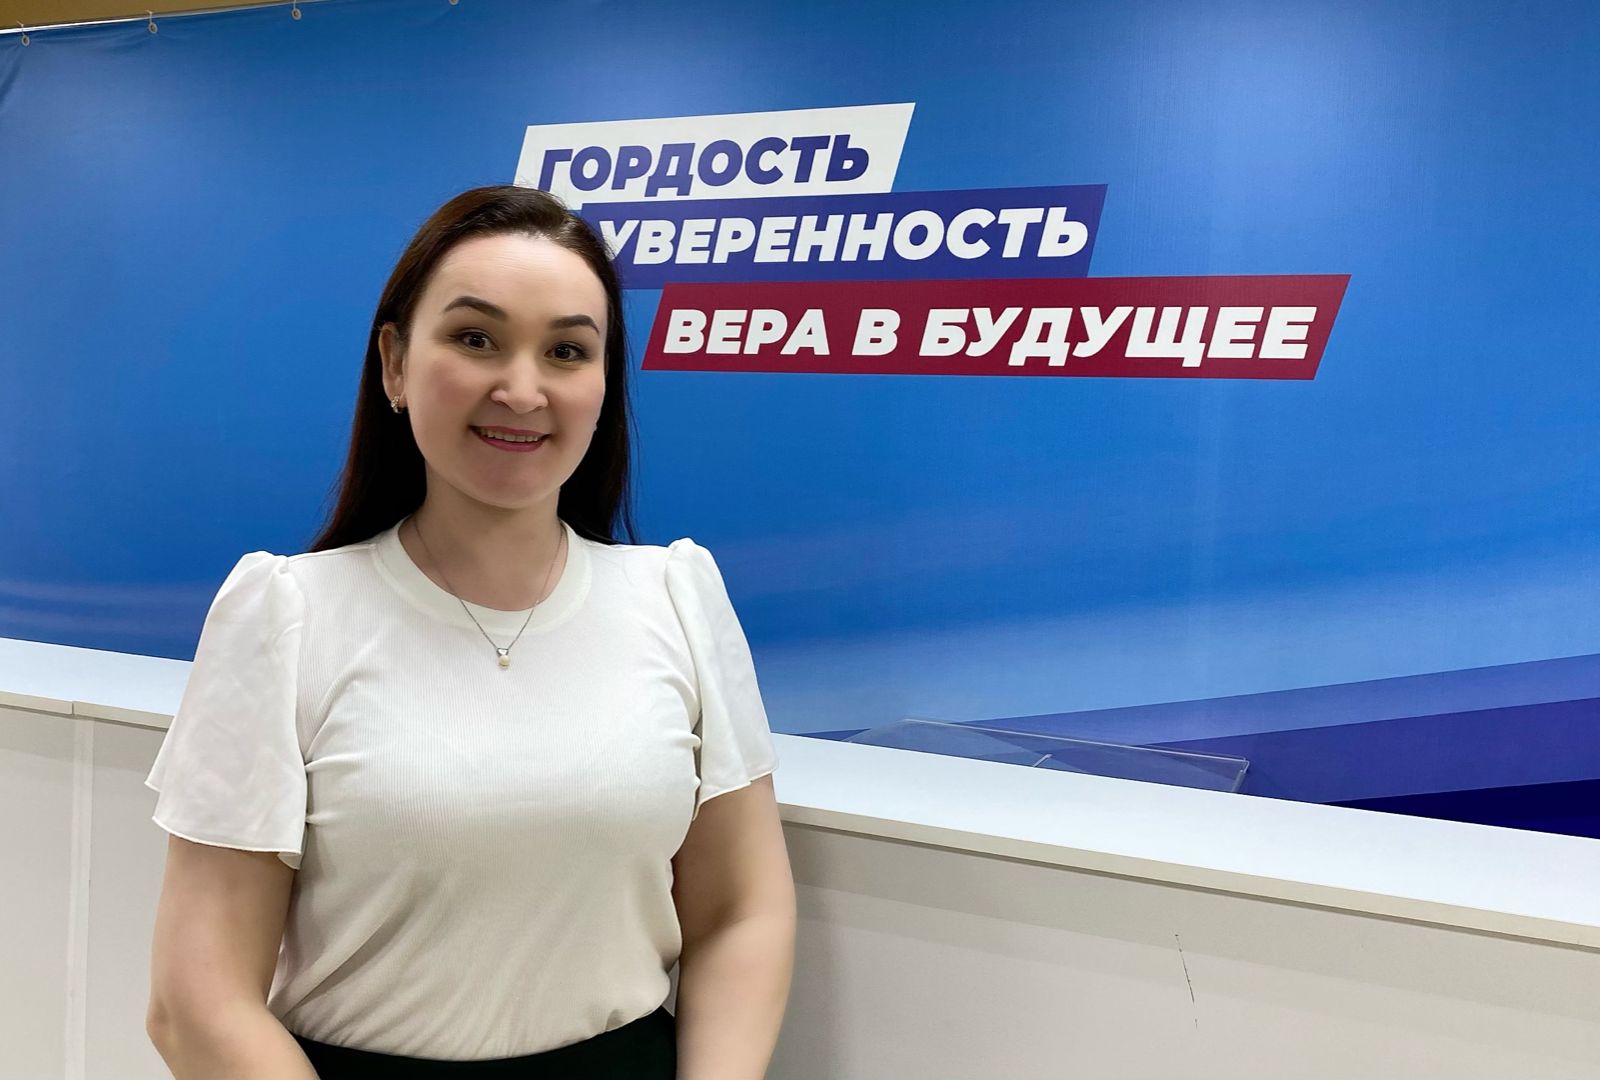 Ирина Бурцева: «Особенно важны для Якутии слова президента о народосбережении»